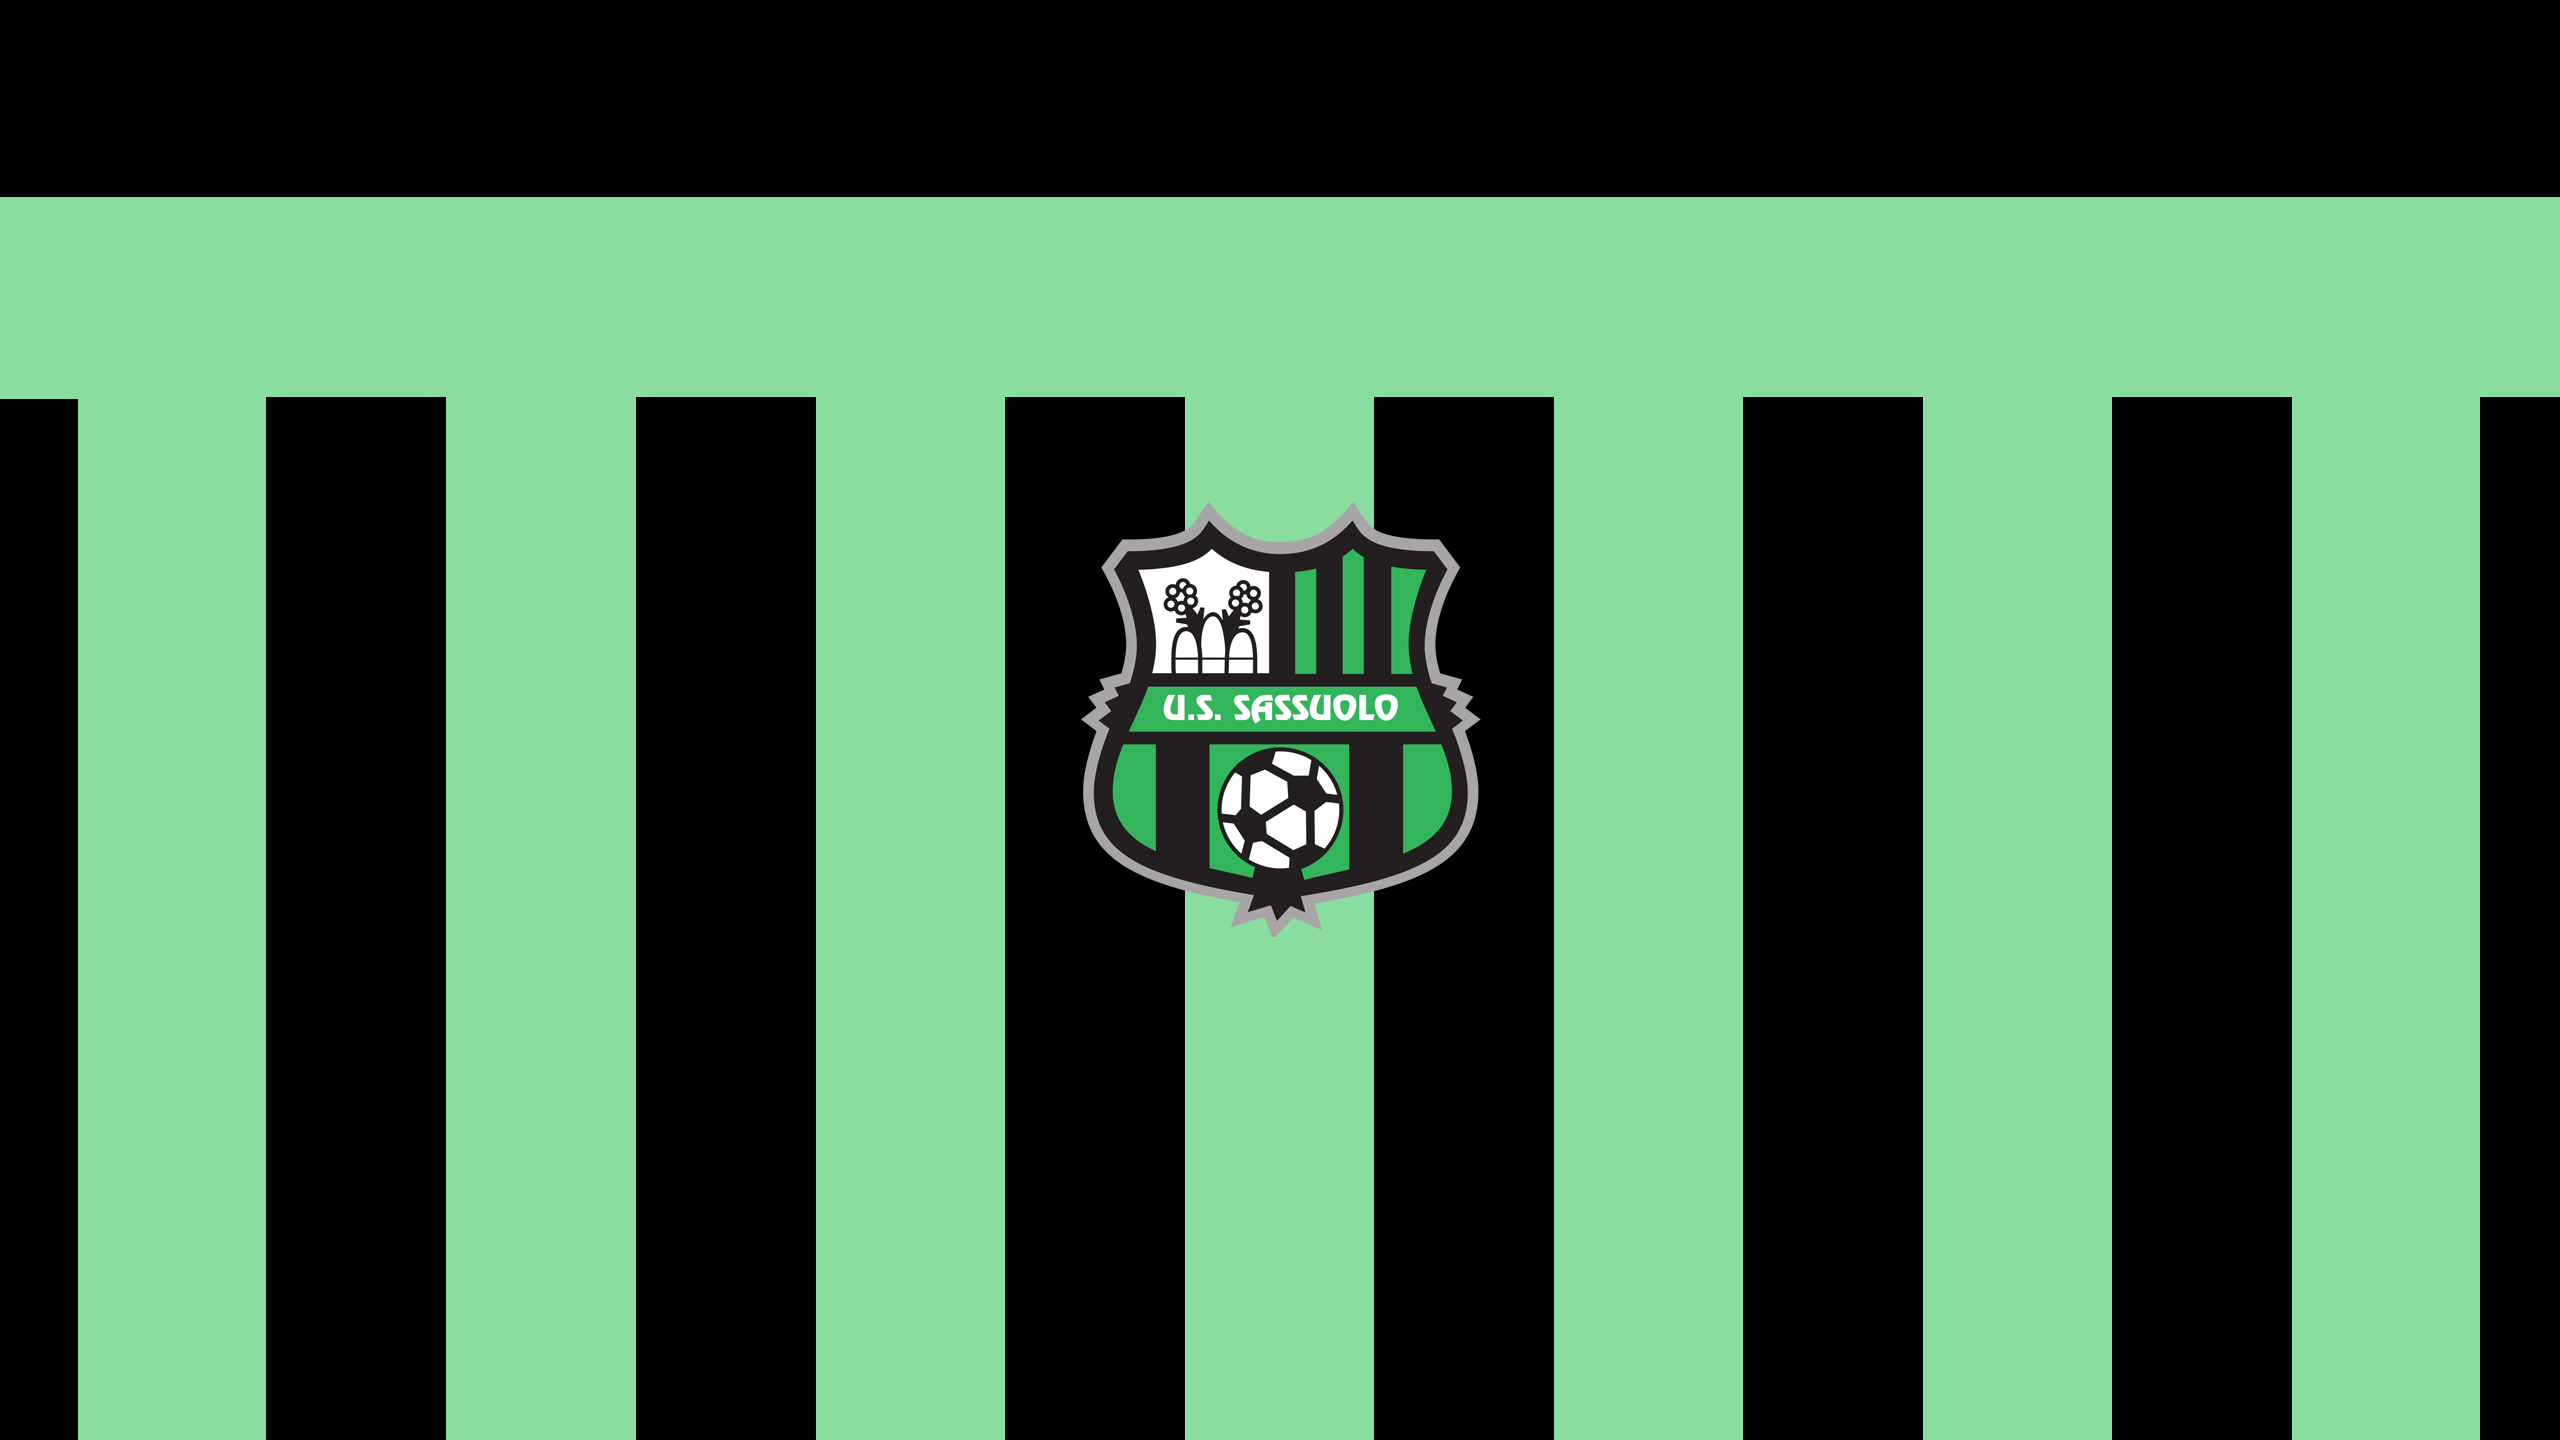 U.S. Sassuolo Calcio - Serie A - Soccer - Square Bettor